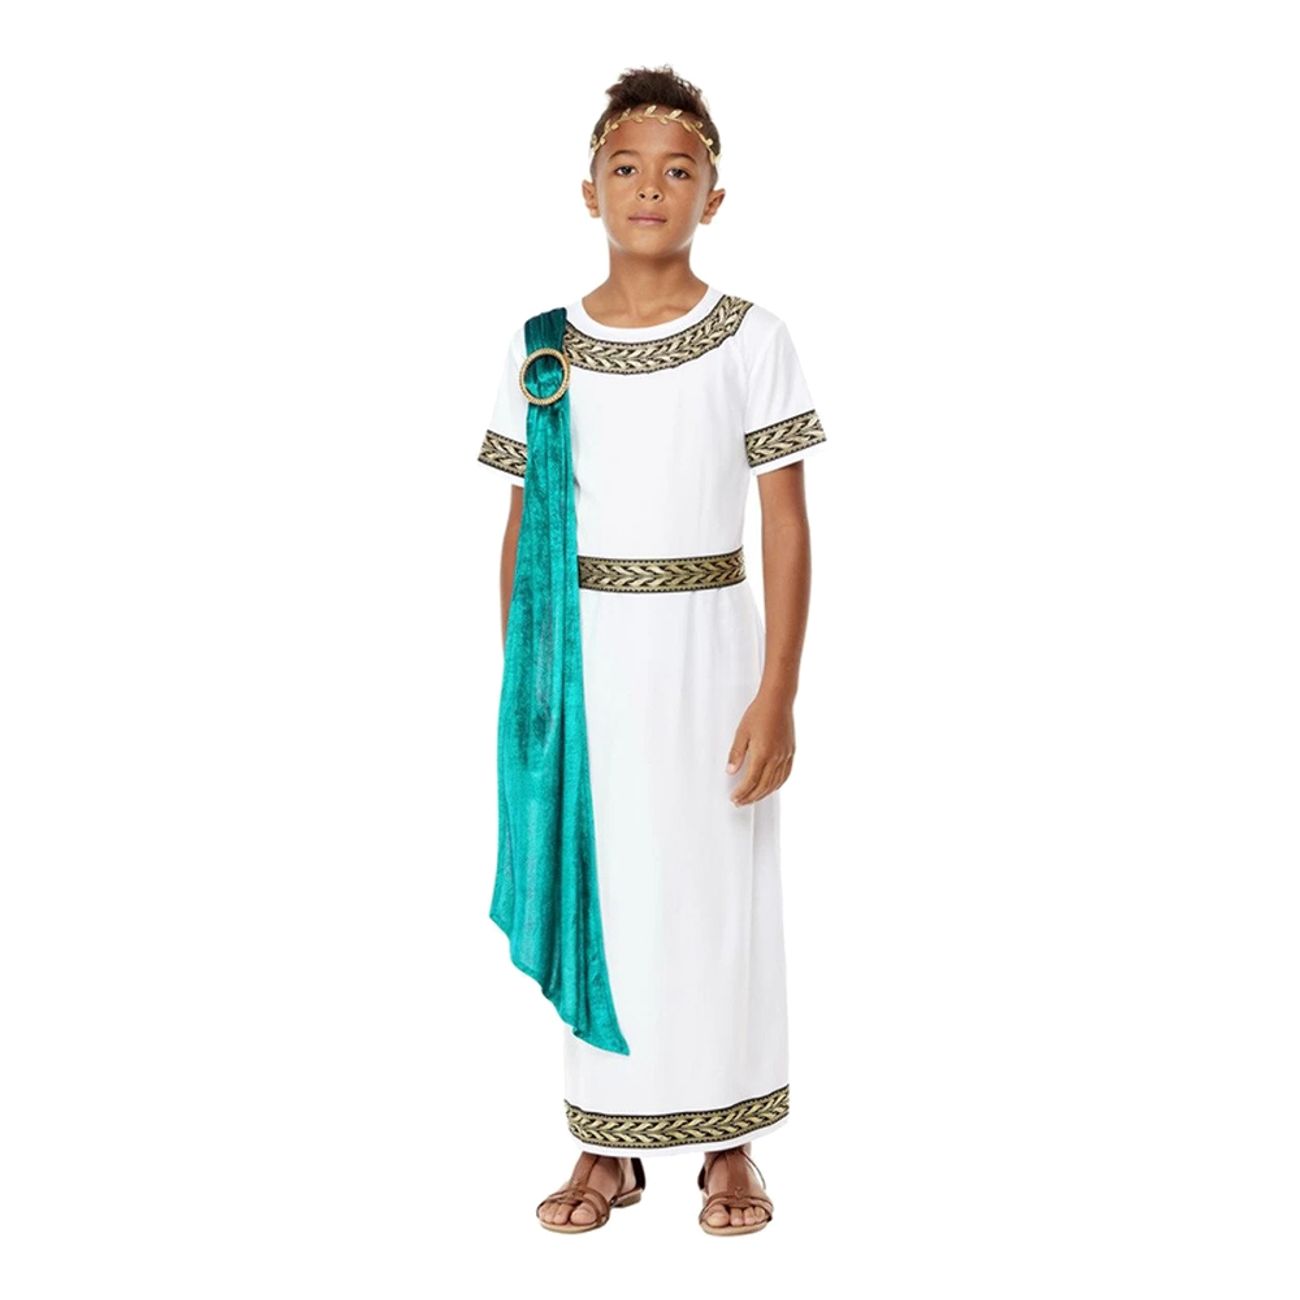 romersk-kejsare-barn-maskeraddrakt-79024-1